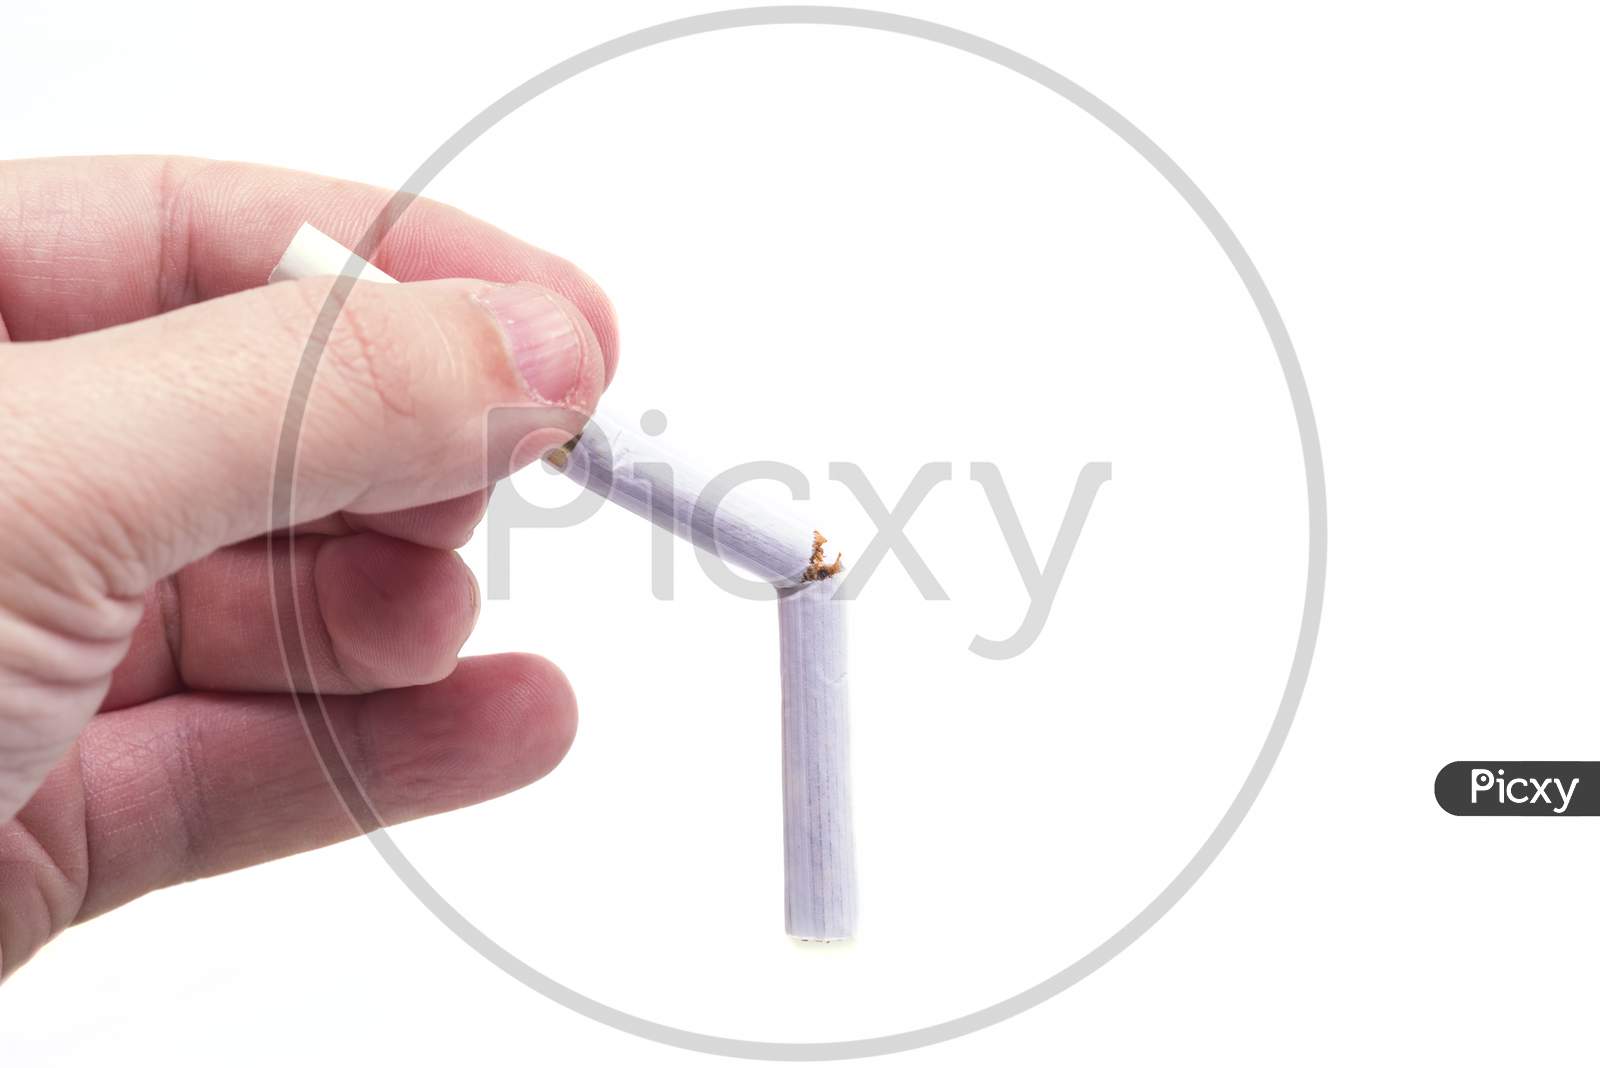 Hand Holding A Broken Cigarette